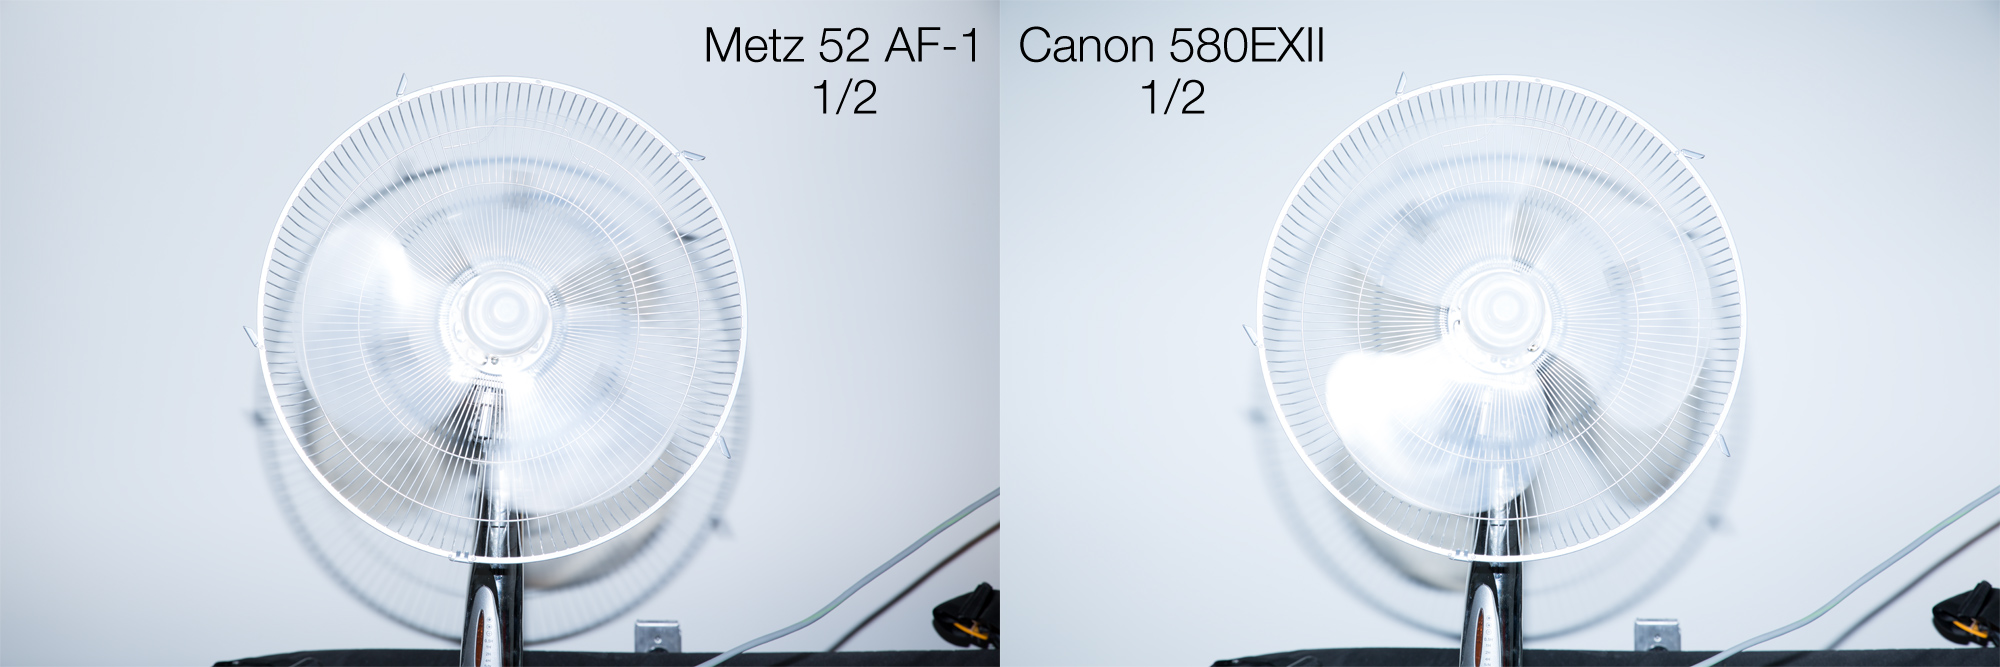 diseño idéntico metz 52 af-1 para Nikon Pro solution b520-af Flash/Blitz